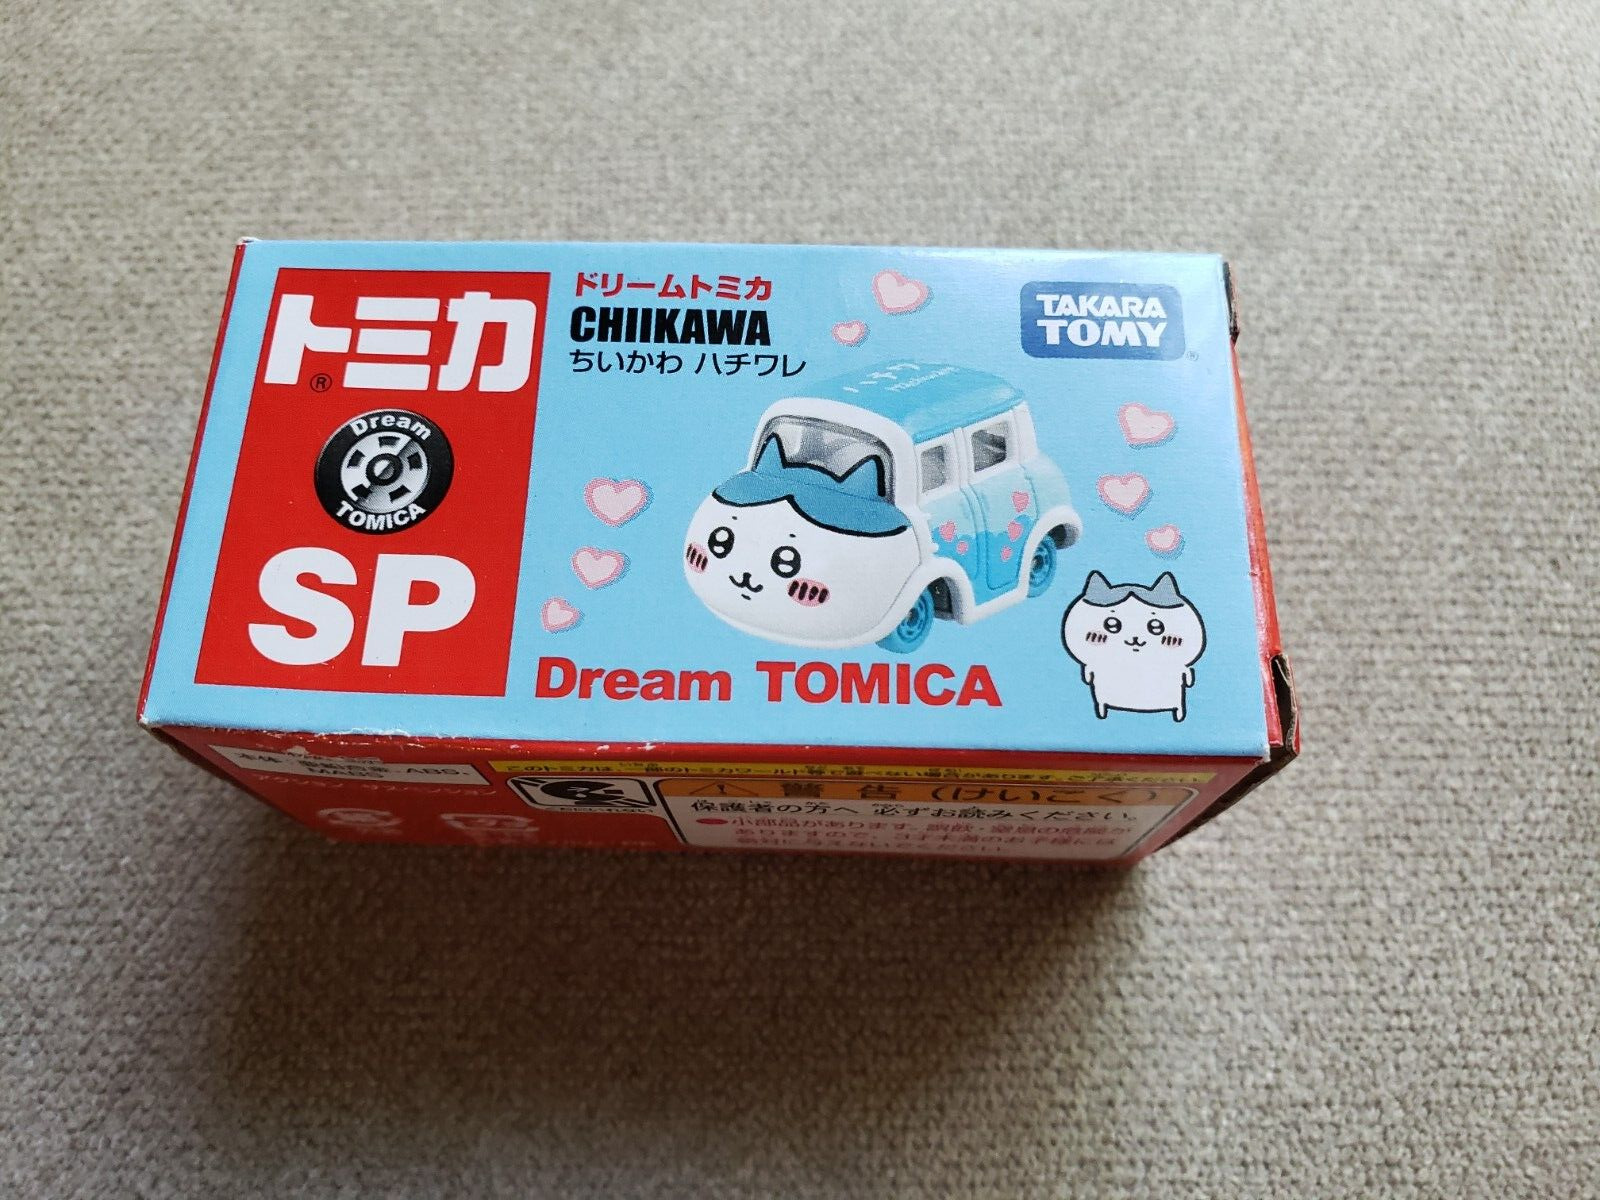 Chikawa Hachiware Mini Car Takara Tomy Tomica Dream Tomica SP Car / New in Box